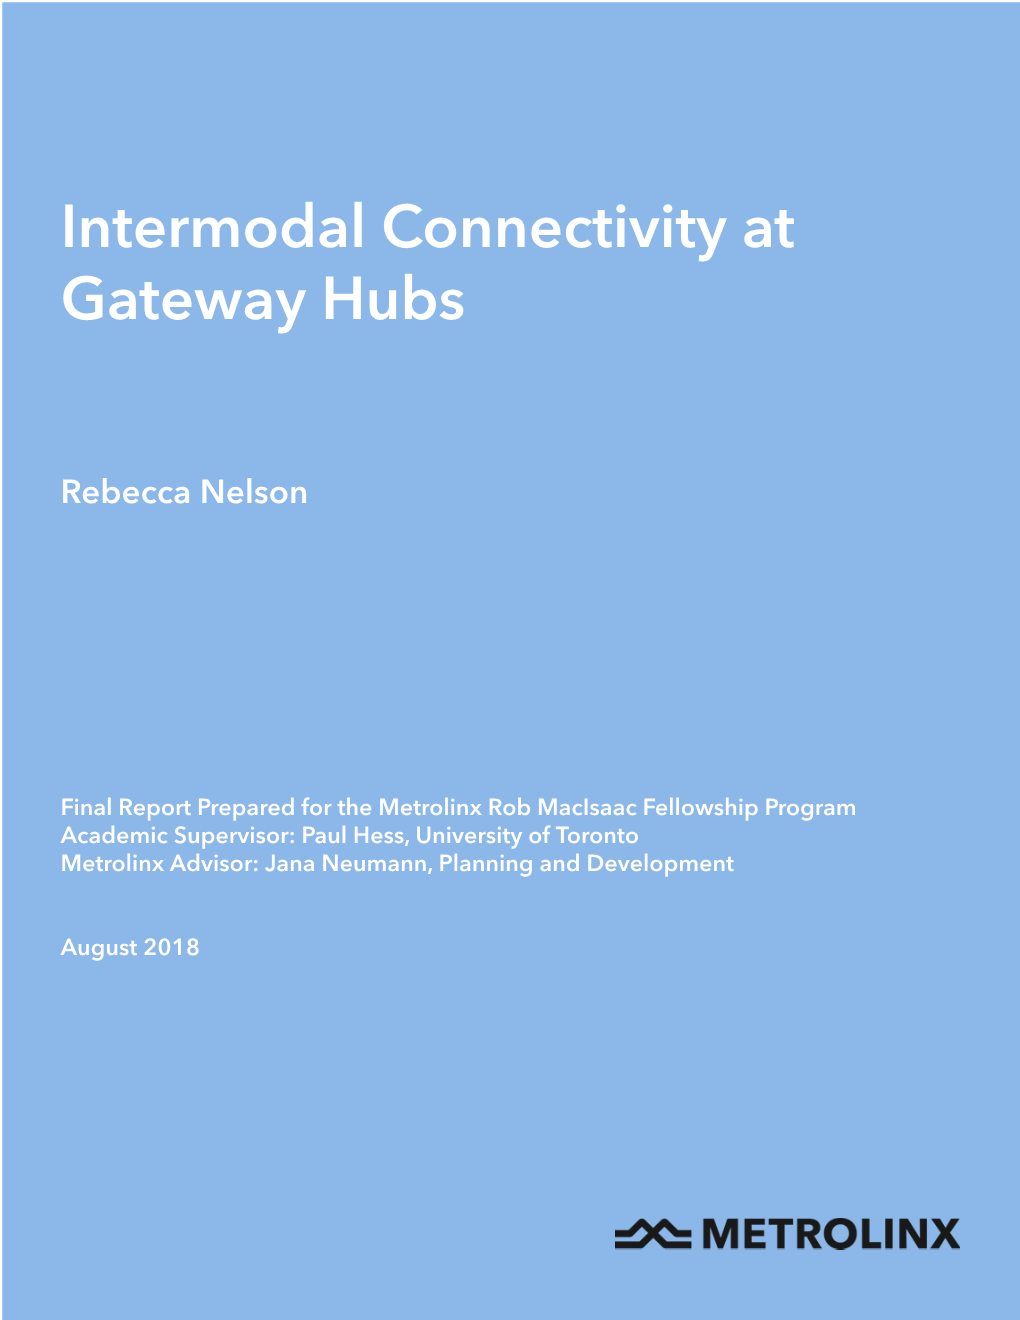 Intermodal Connectivity at Gateway Hubs